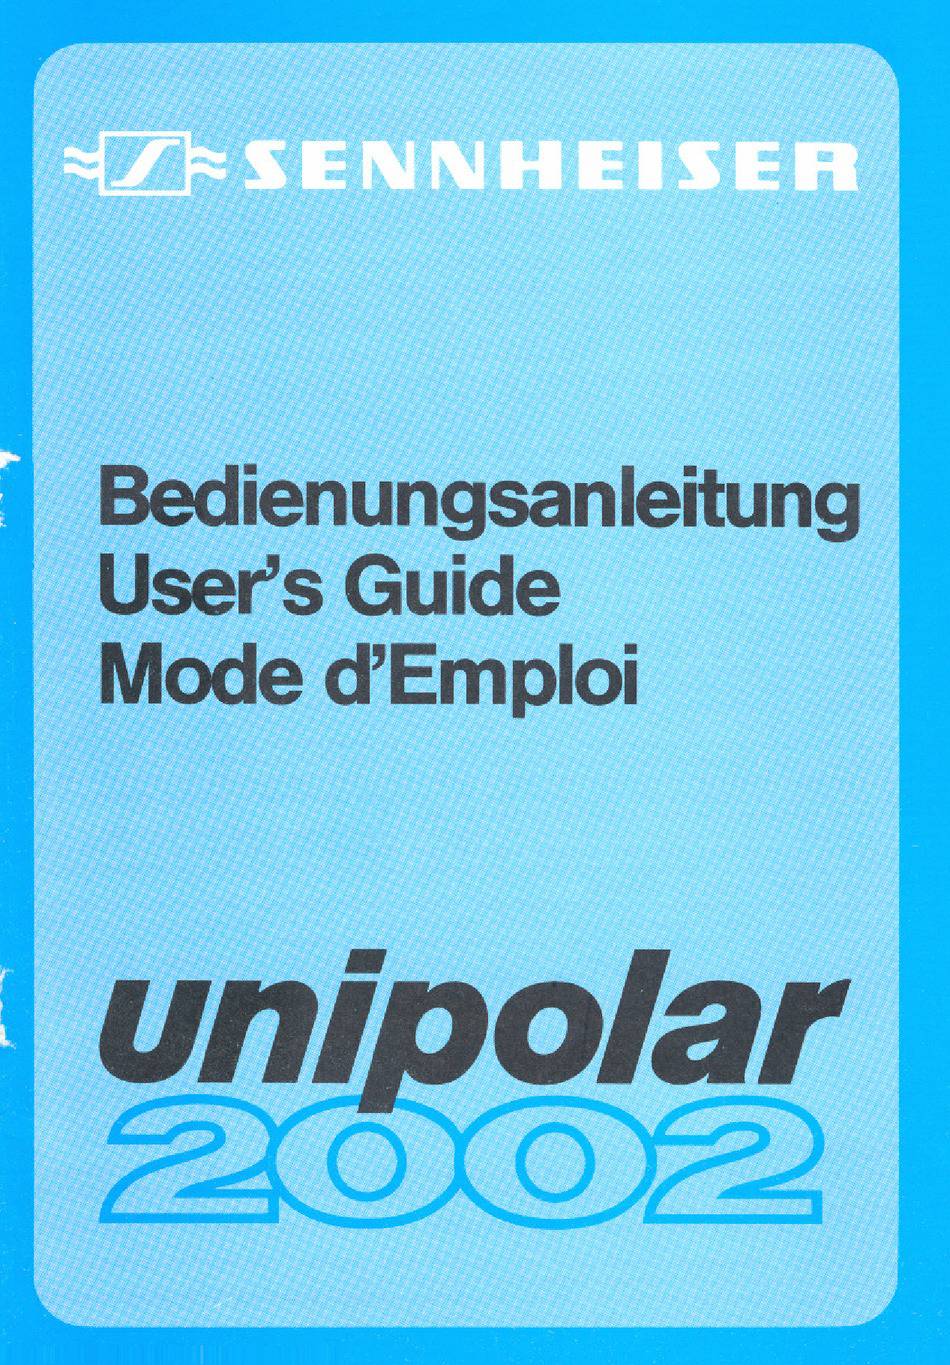 Sennheiser Unipolar 2002